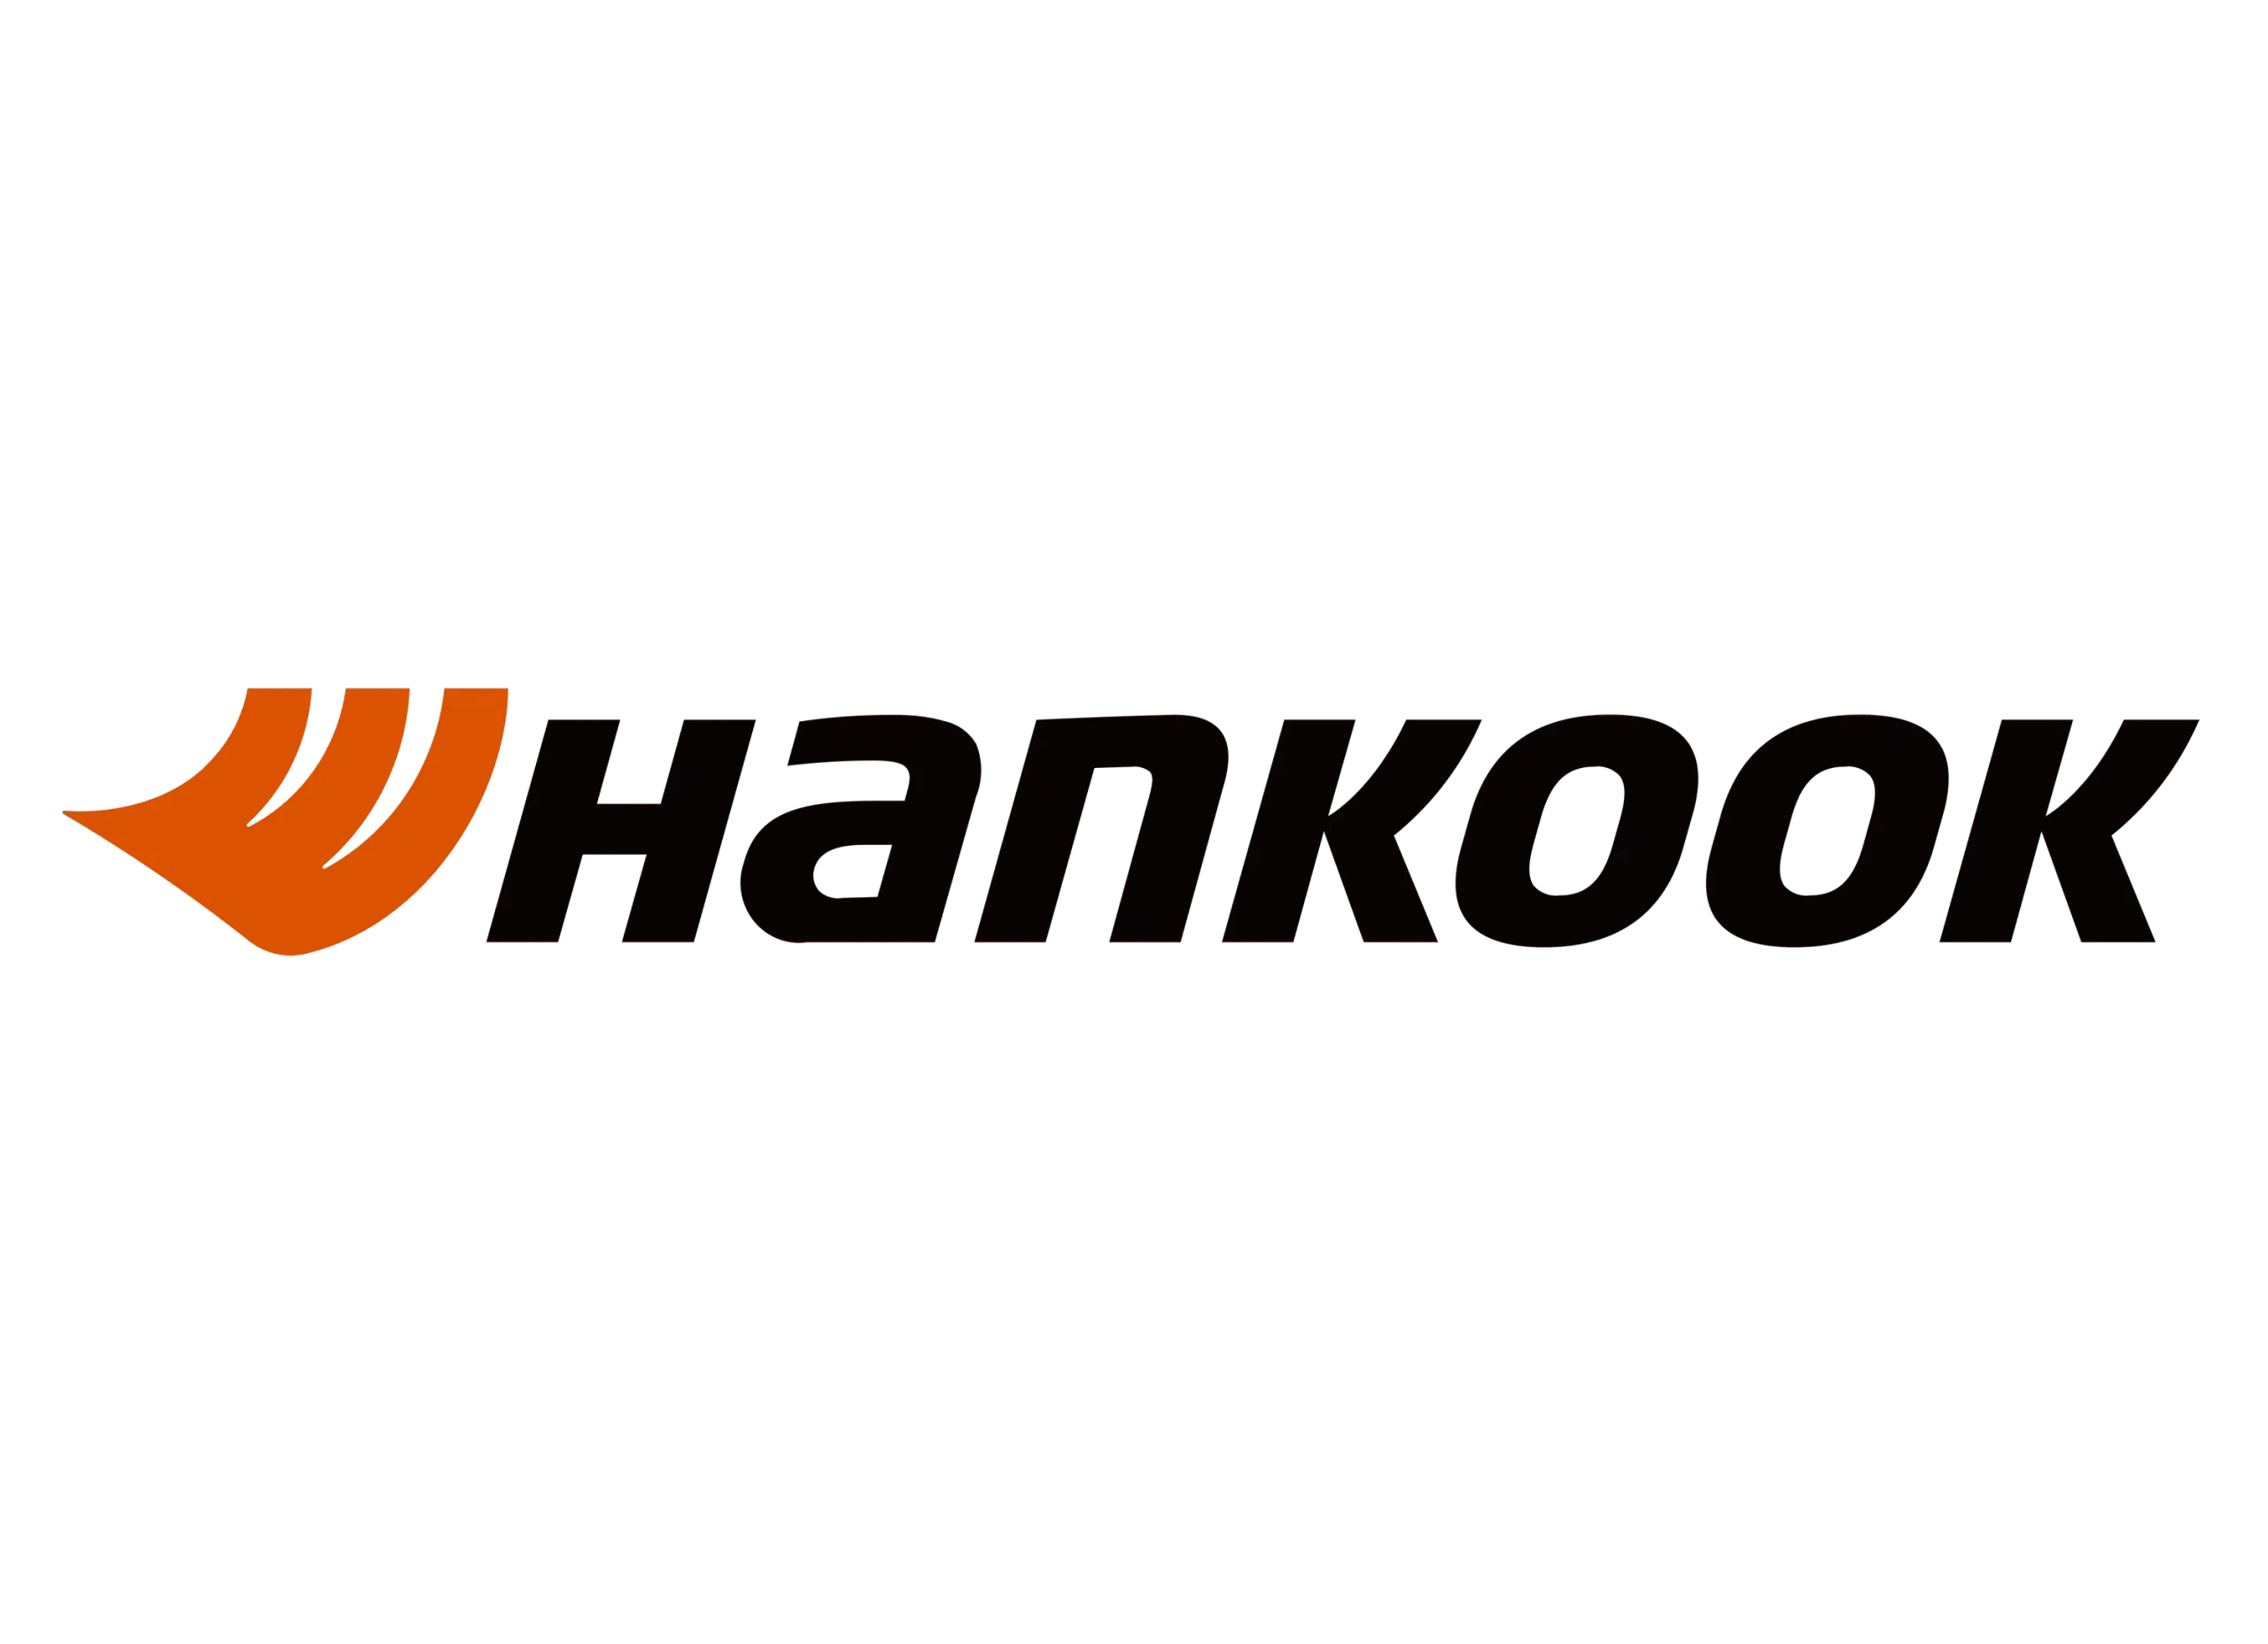 Hankook logo 1999-2019